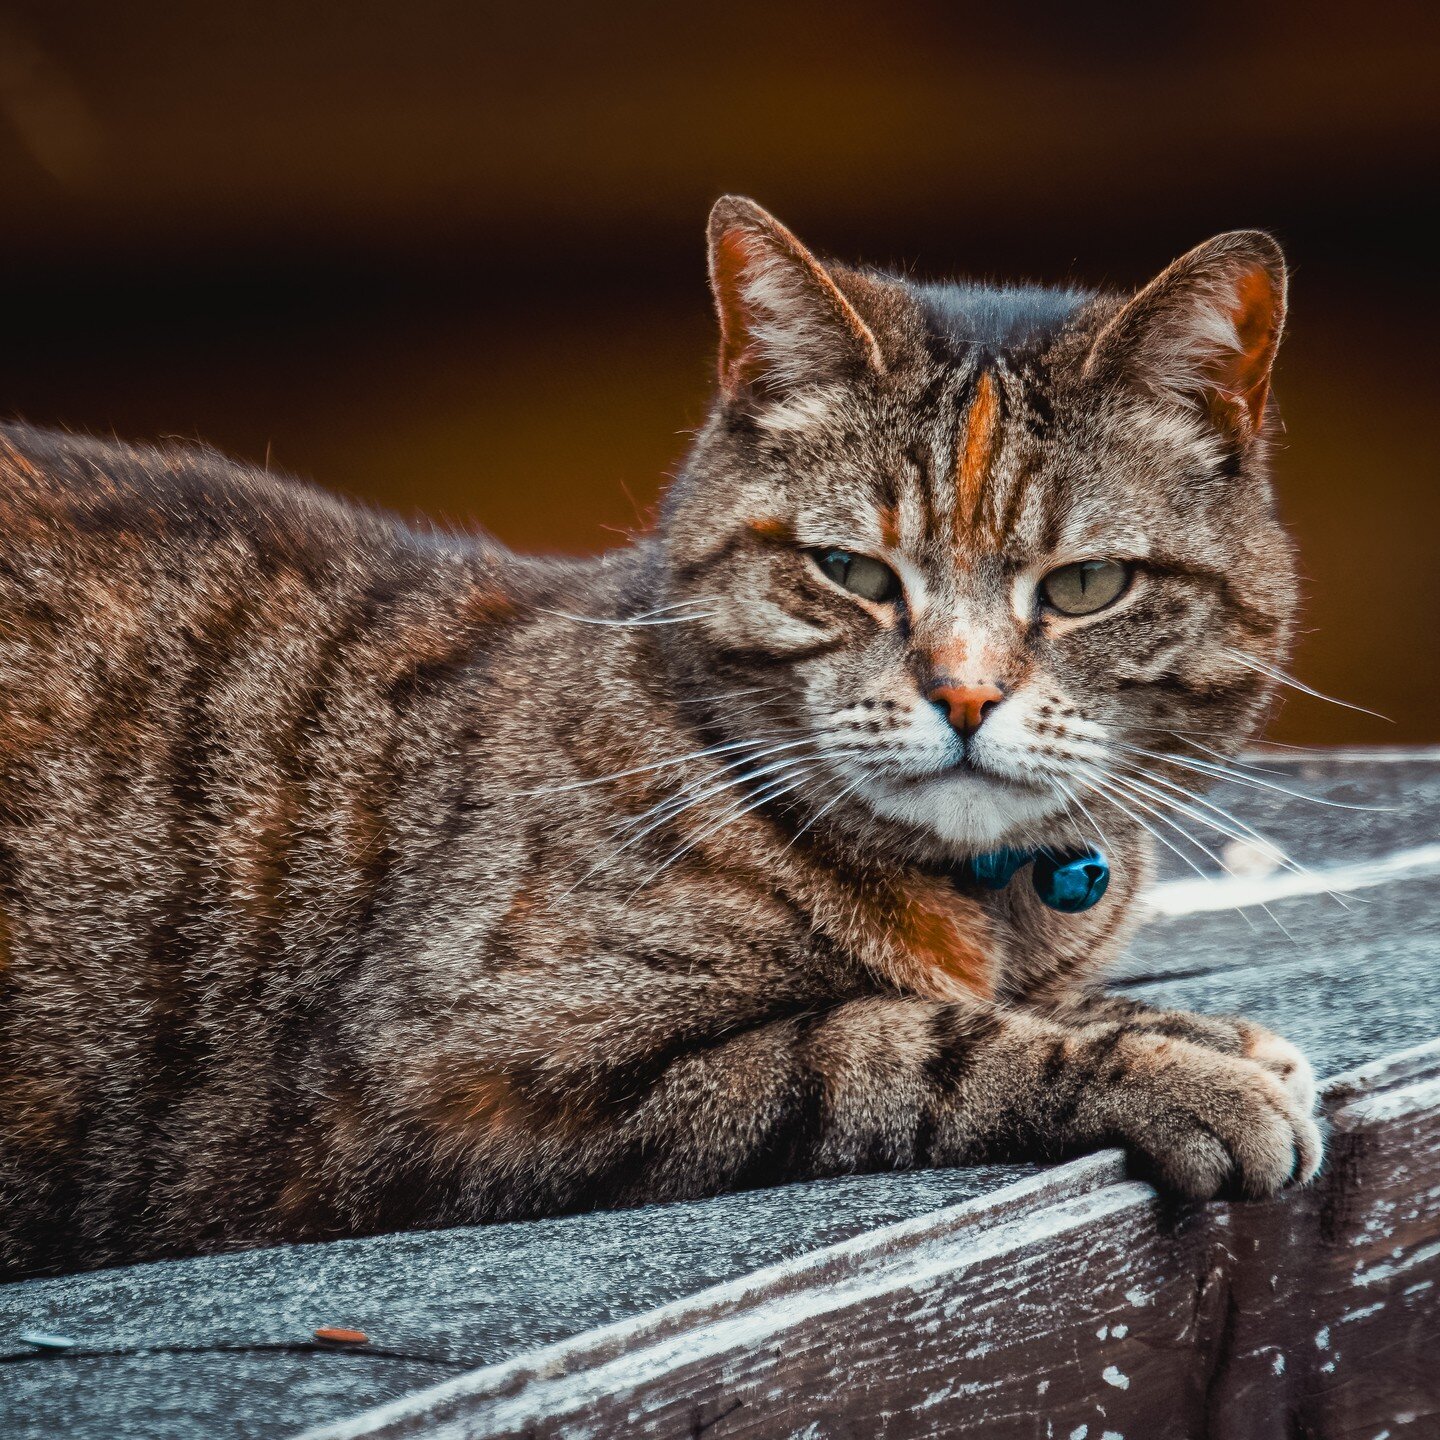 Tess

Neighbours cat on guard duty, scrutinizing all she see...

#cat #cats #pet #catsofinstagram #photography #furry #eyes #feline #orange #tabby #tabbycat #tabbycatworlddomination